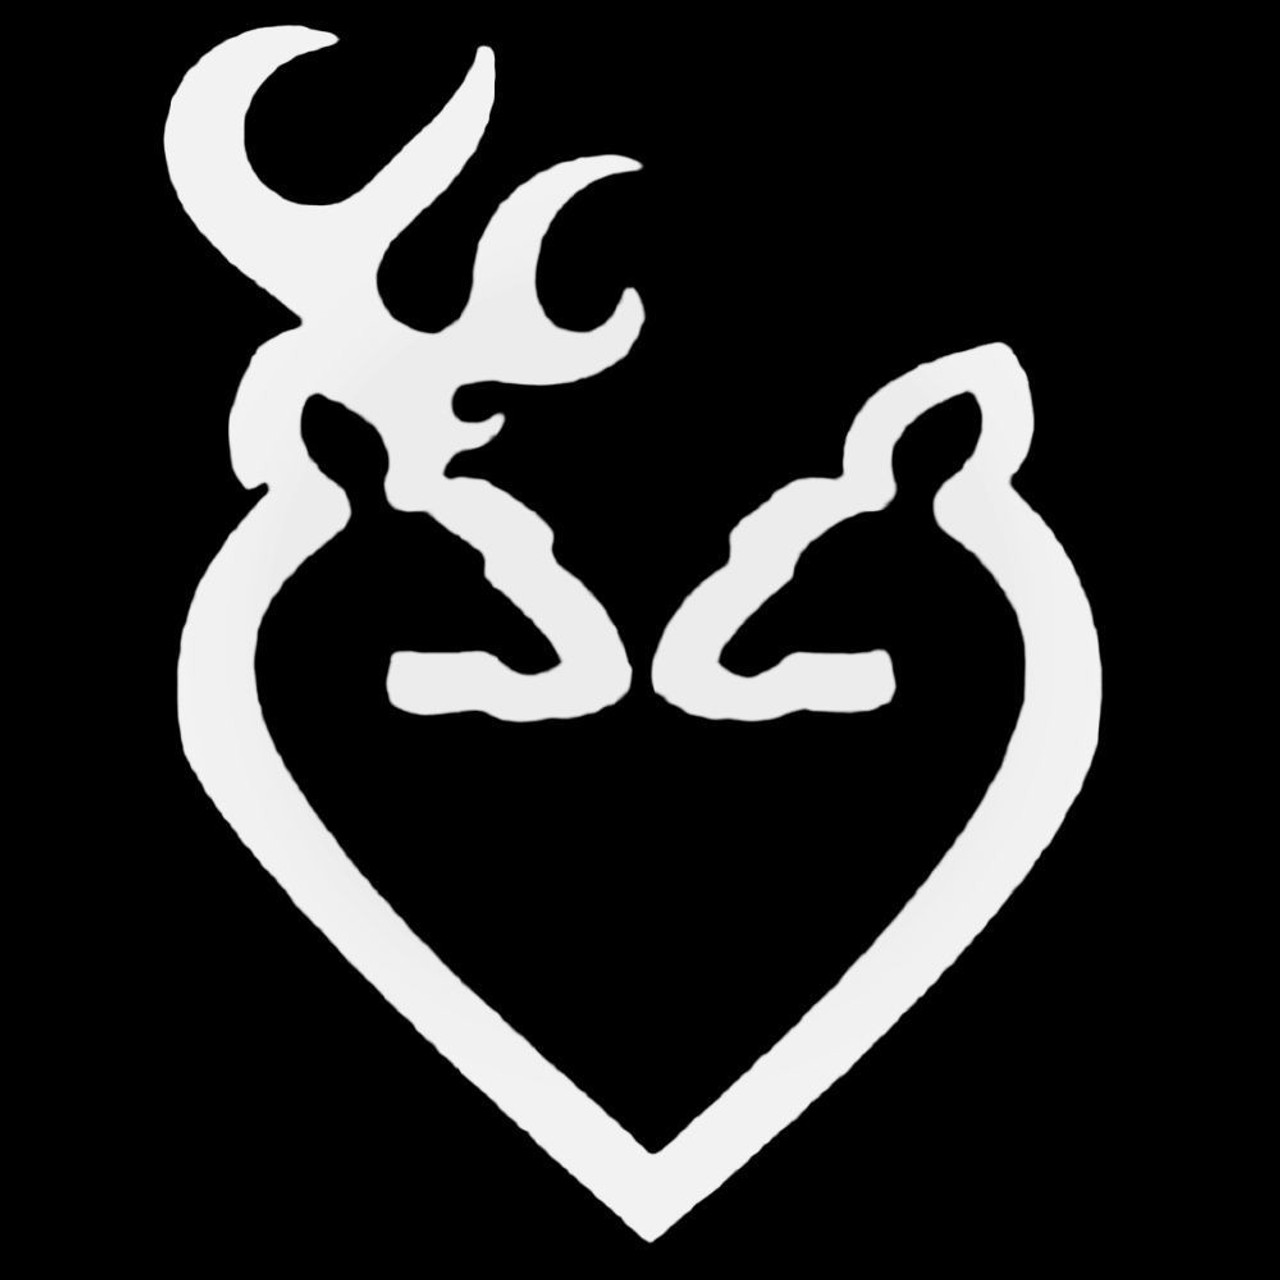 browning heart logo designs